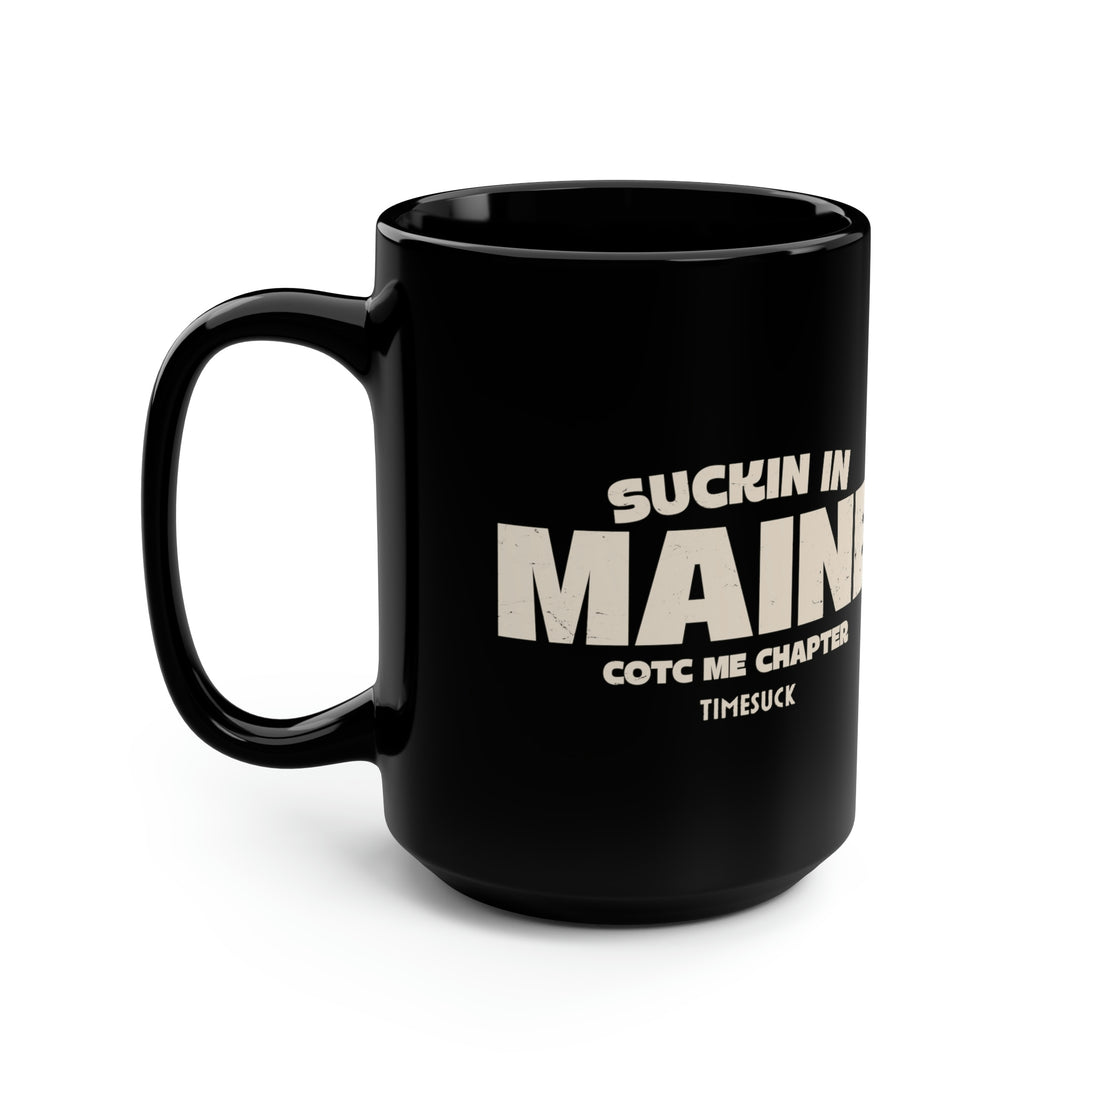 Maine Cult Mug